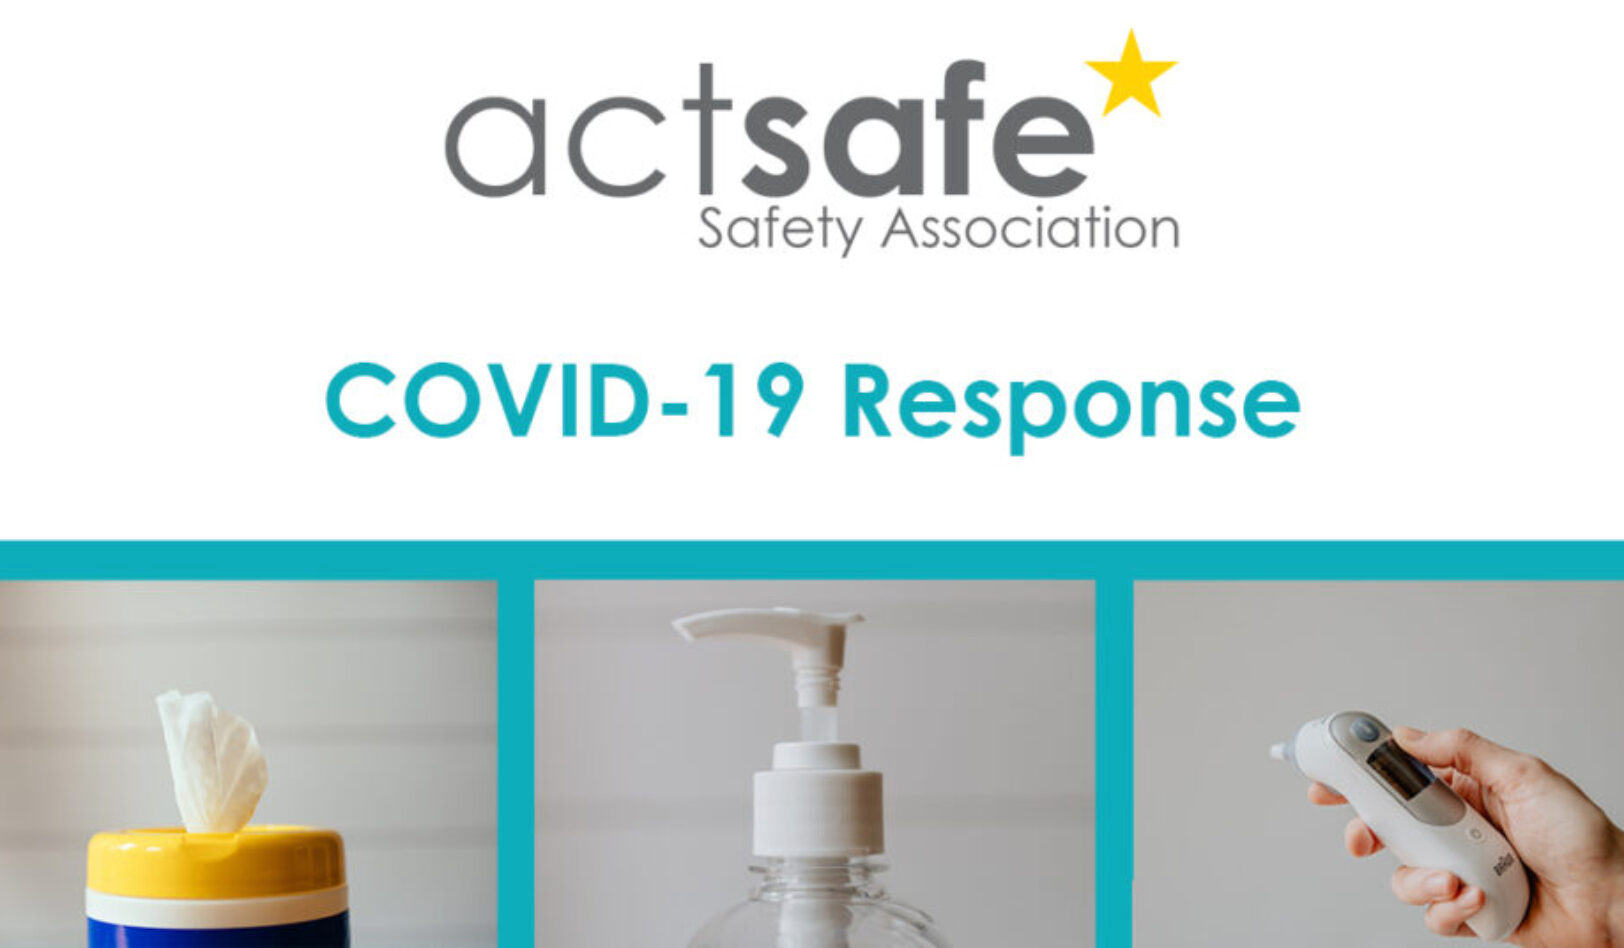 Actsafe’s COVID-19 Response